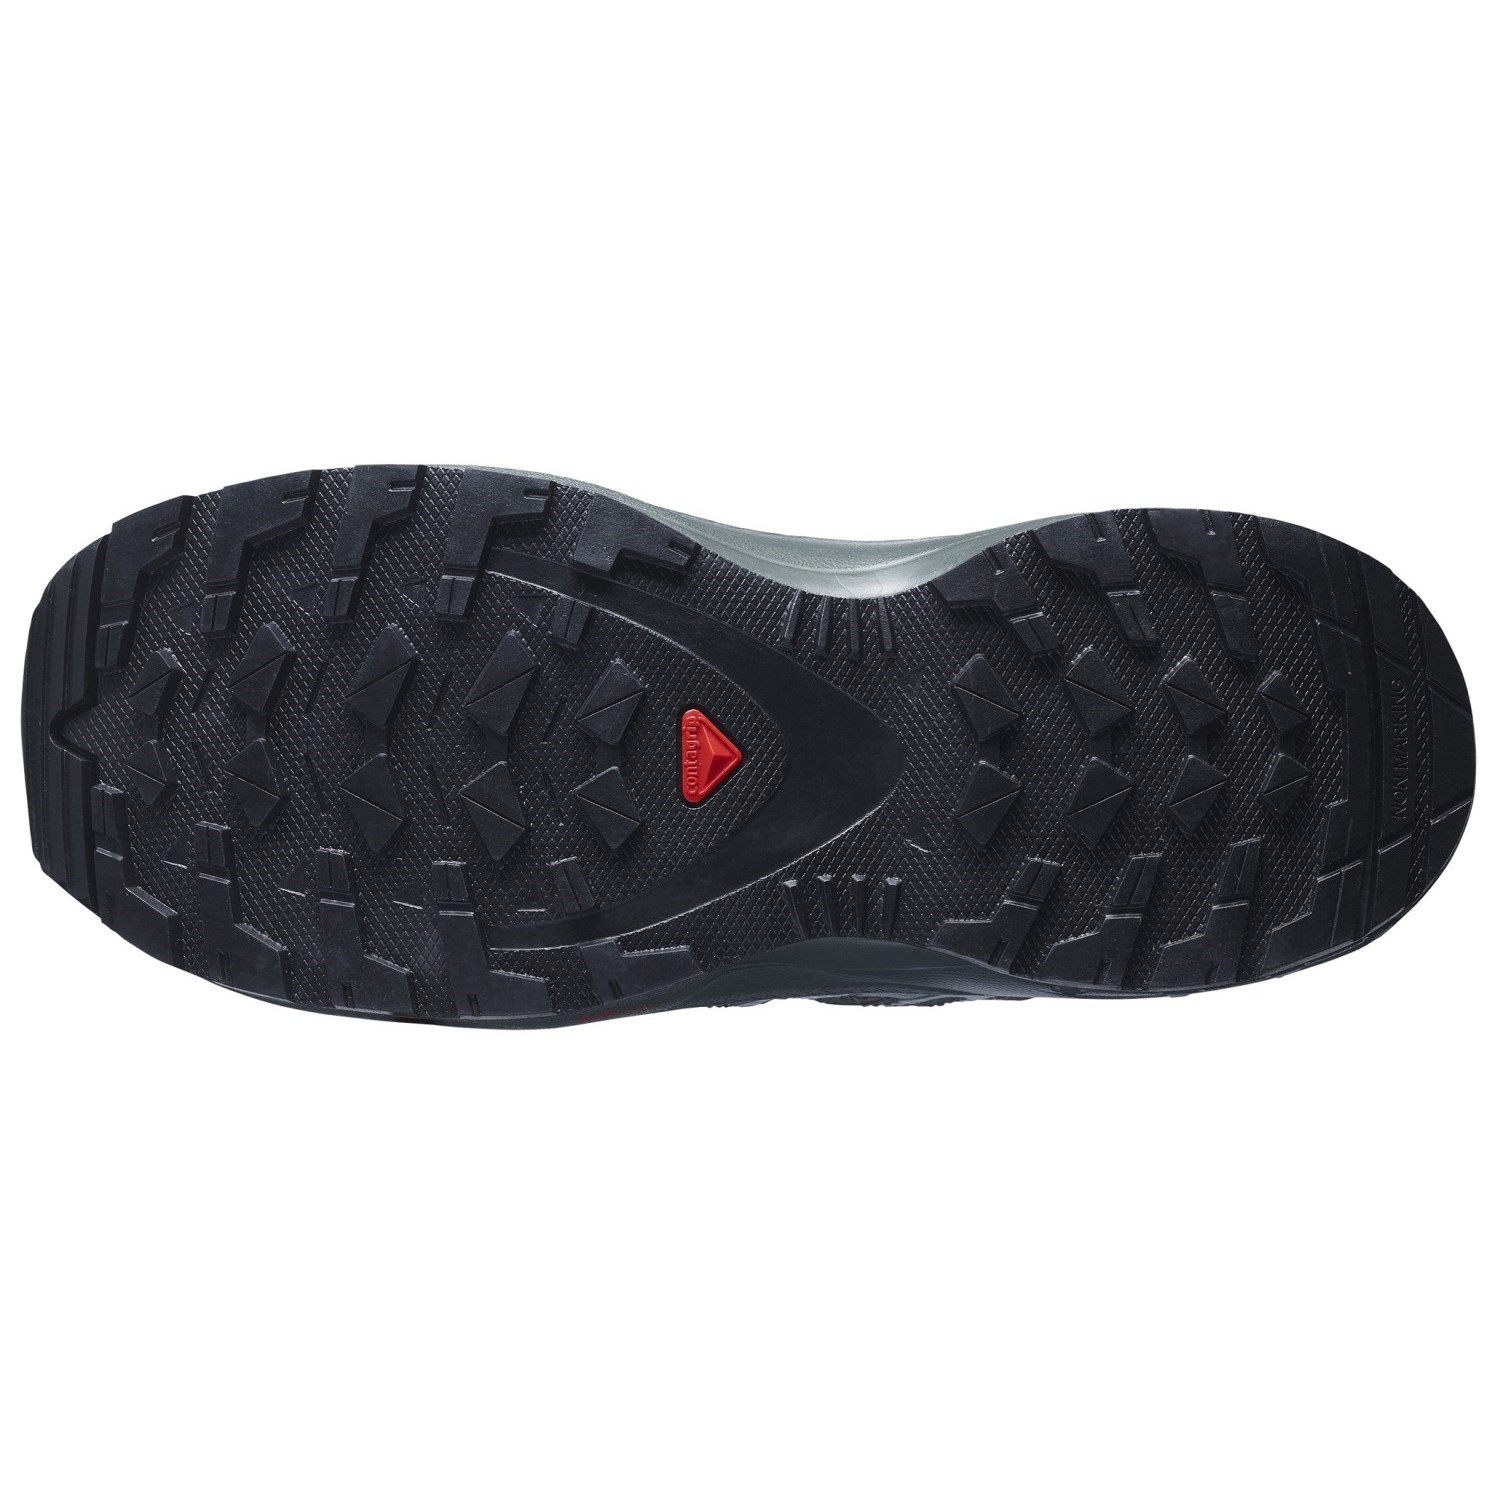 Salomon XA Pro v8 - Kids Trail Running Shoes - Black/Urban Chic/Sulphur ...